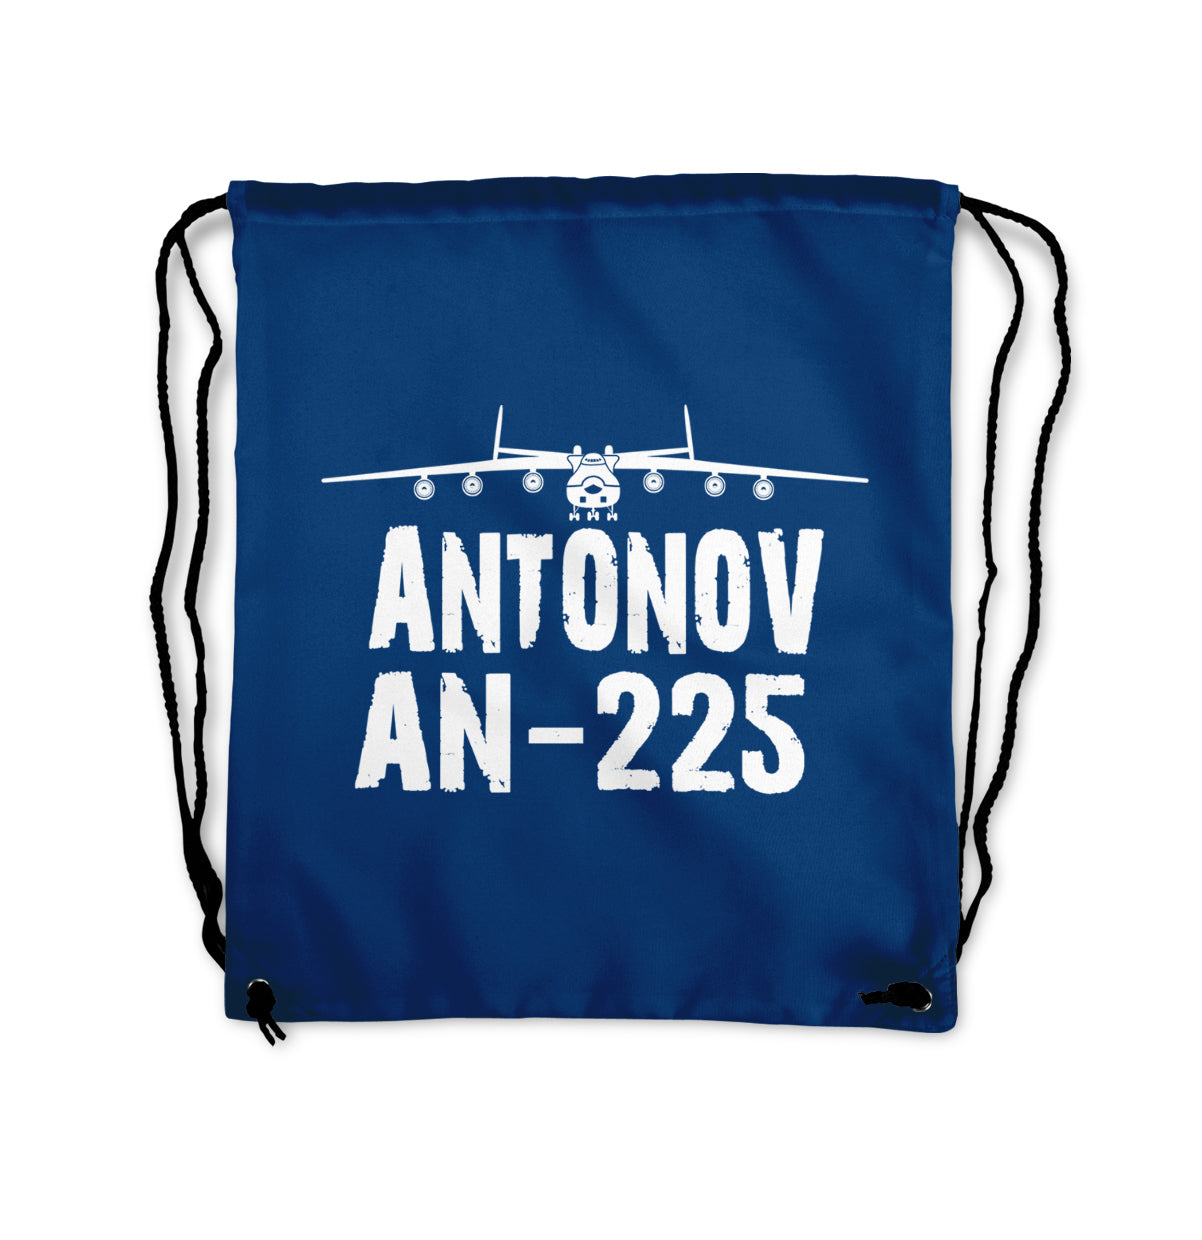 Antonov AN-225 & Plane Designed Drawstring Bags